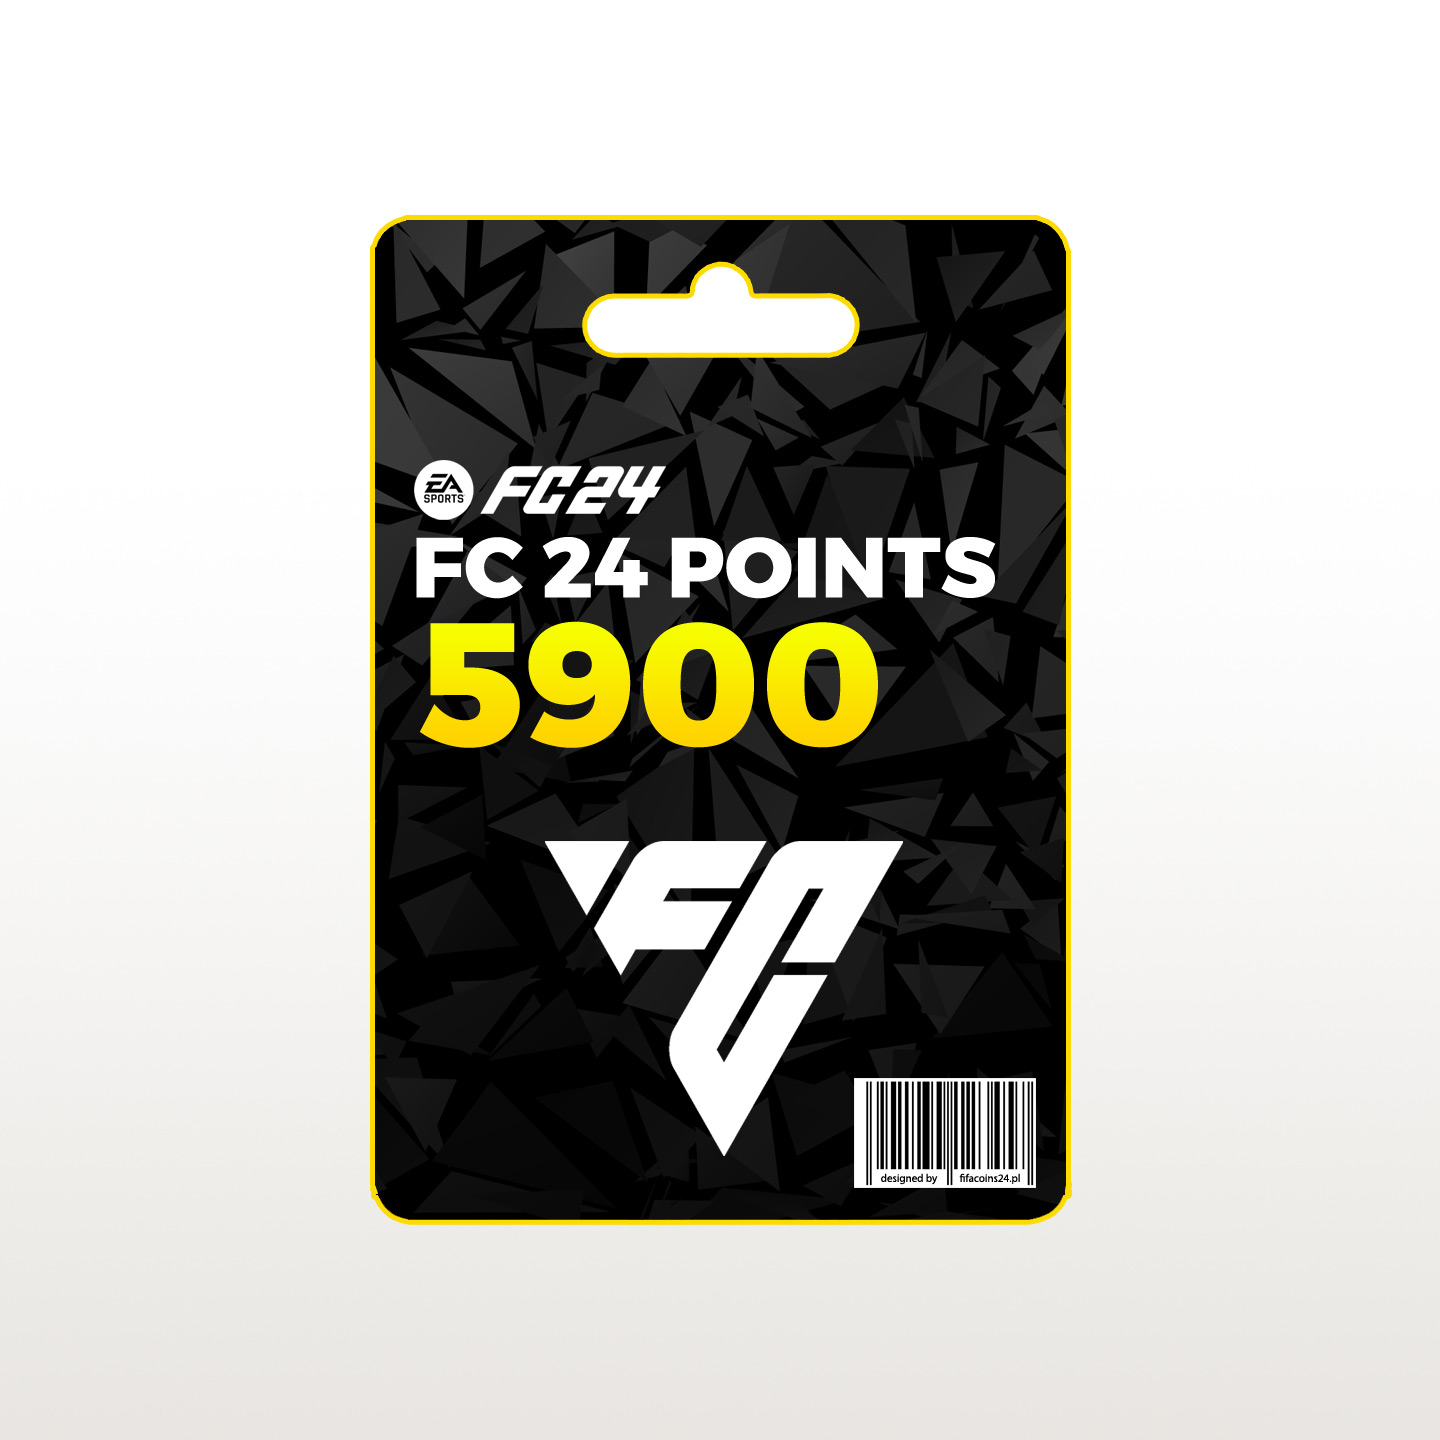 5900 FC 24 POINTS